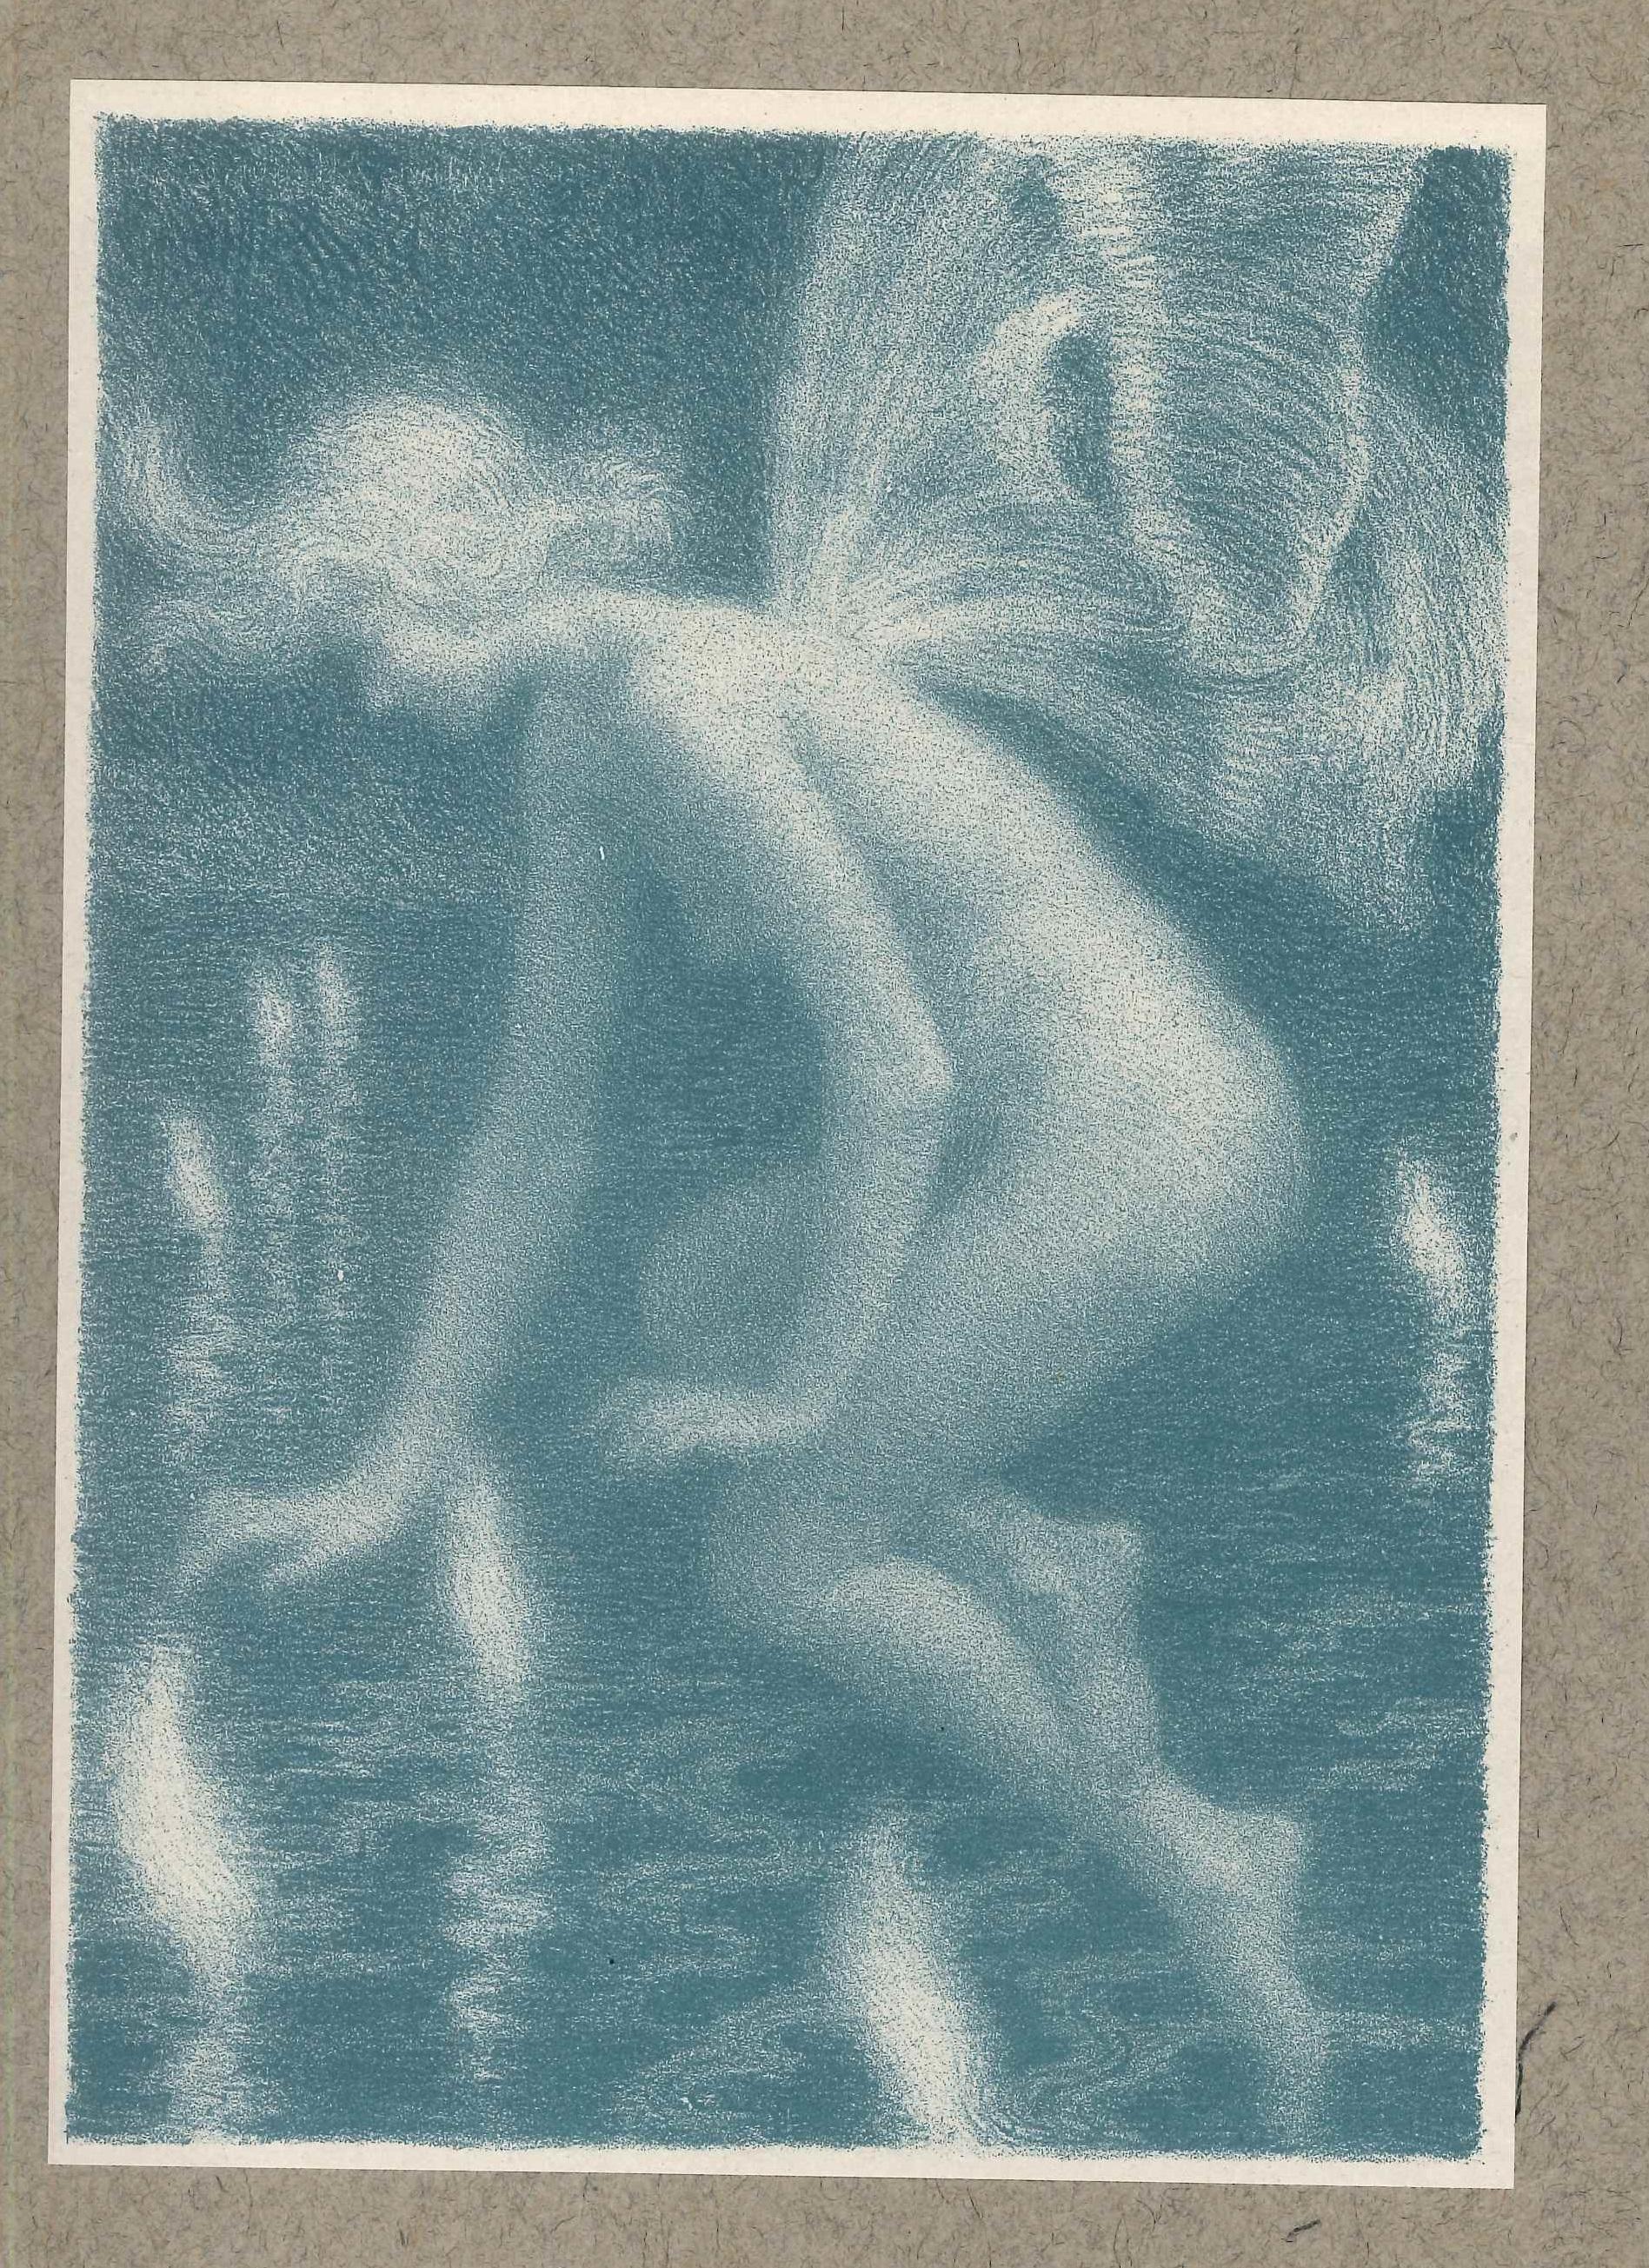 Ludovic Alleaume Figurative Print - Phalène et feux follets - Original Lithograph by L. Alleaume - Early 1900